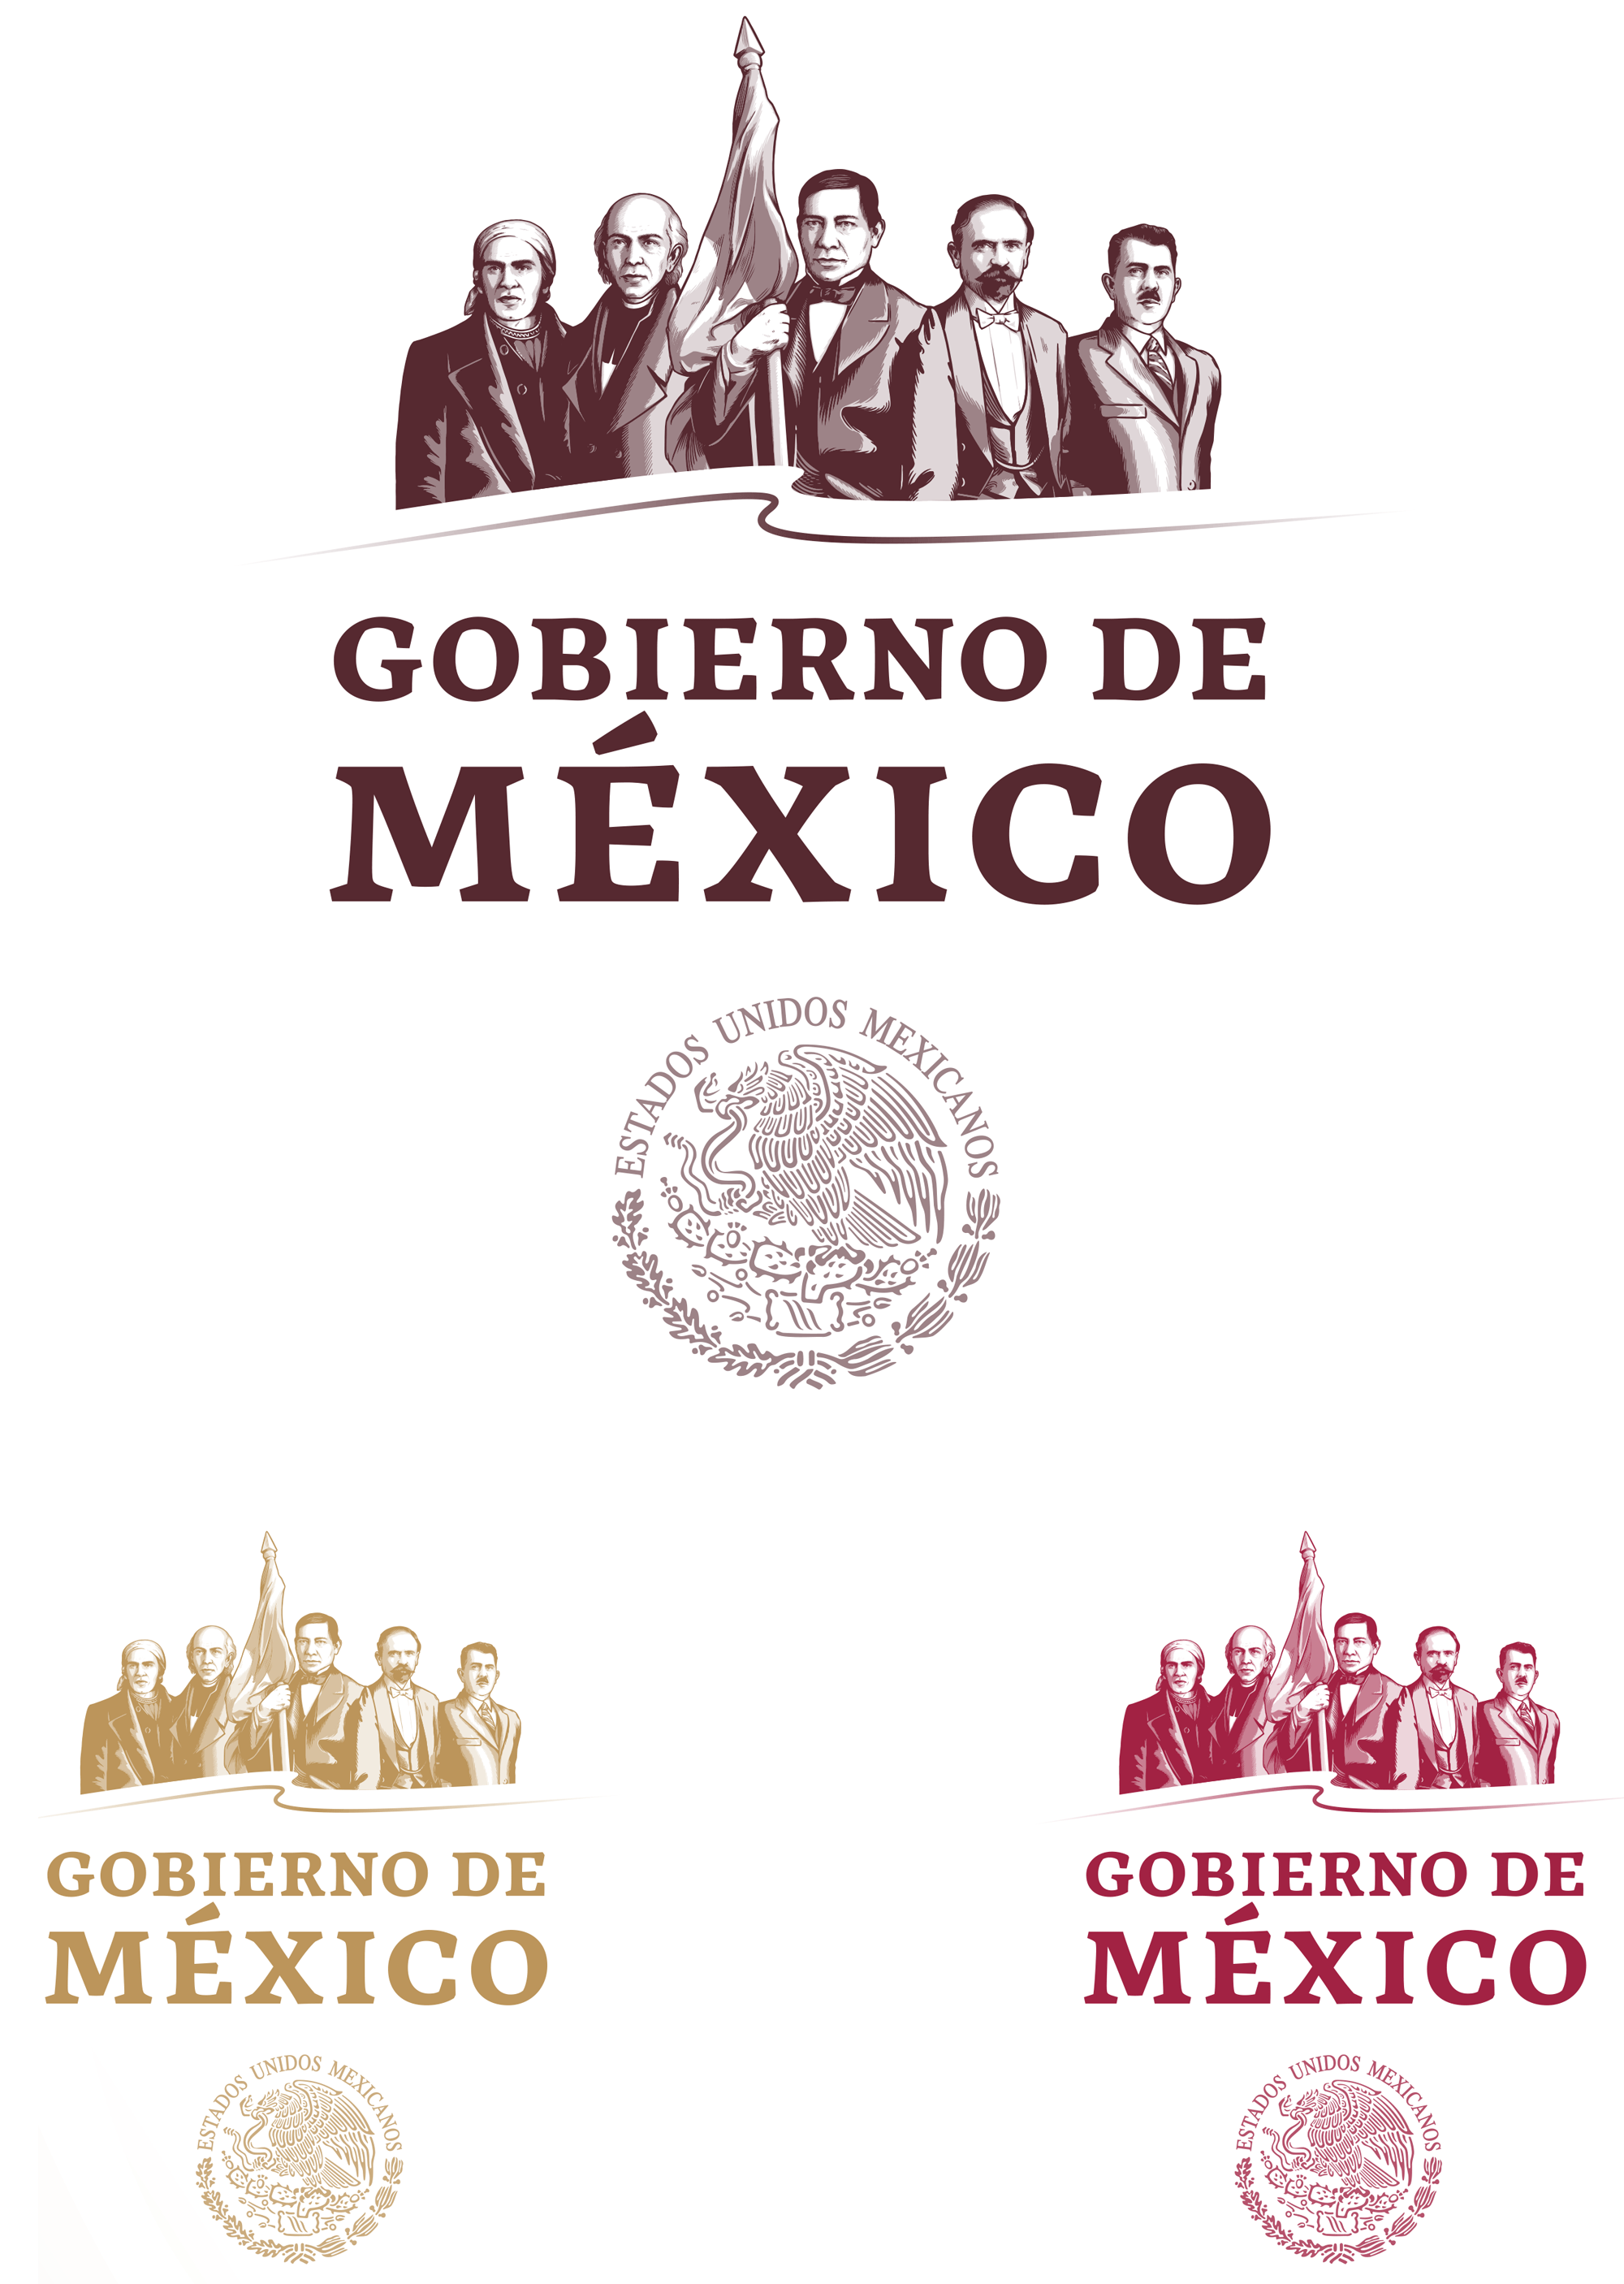 Mexico Logo - Brand New: New Logo for Government of Mexico